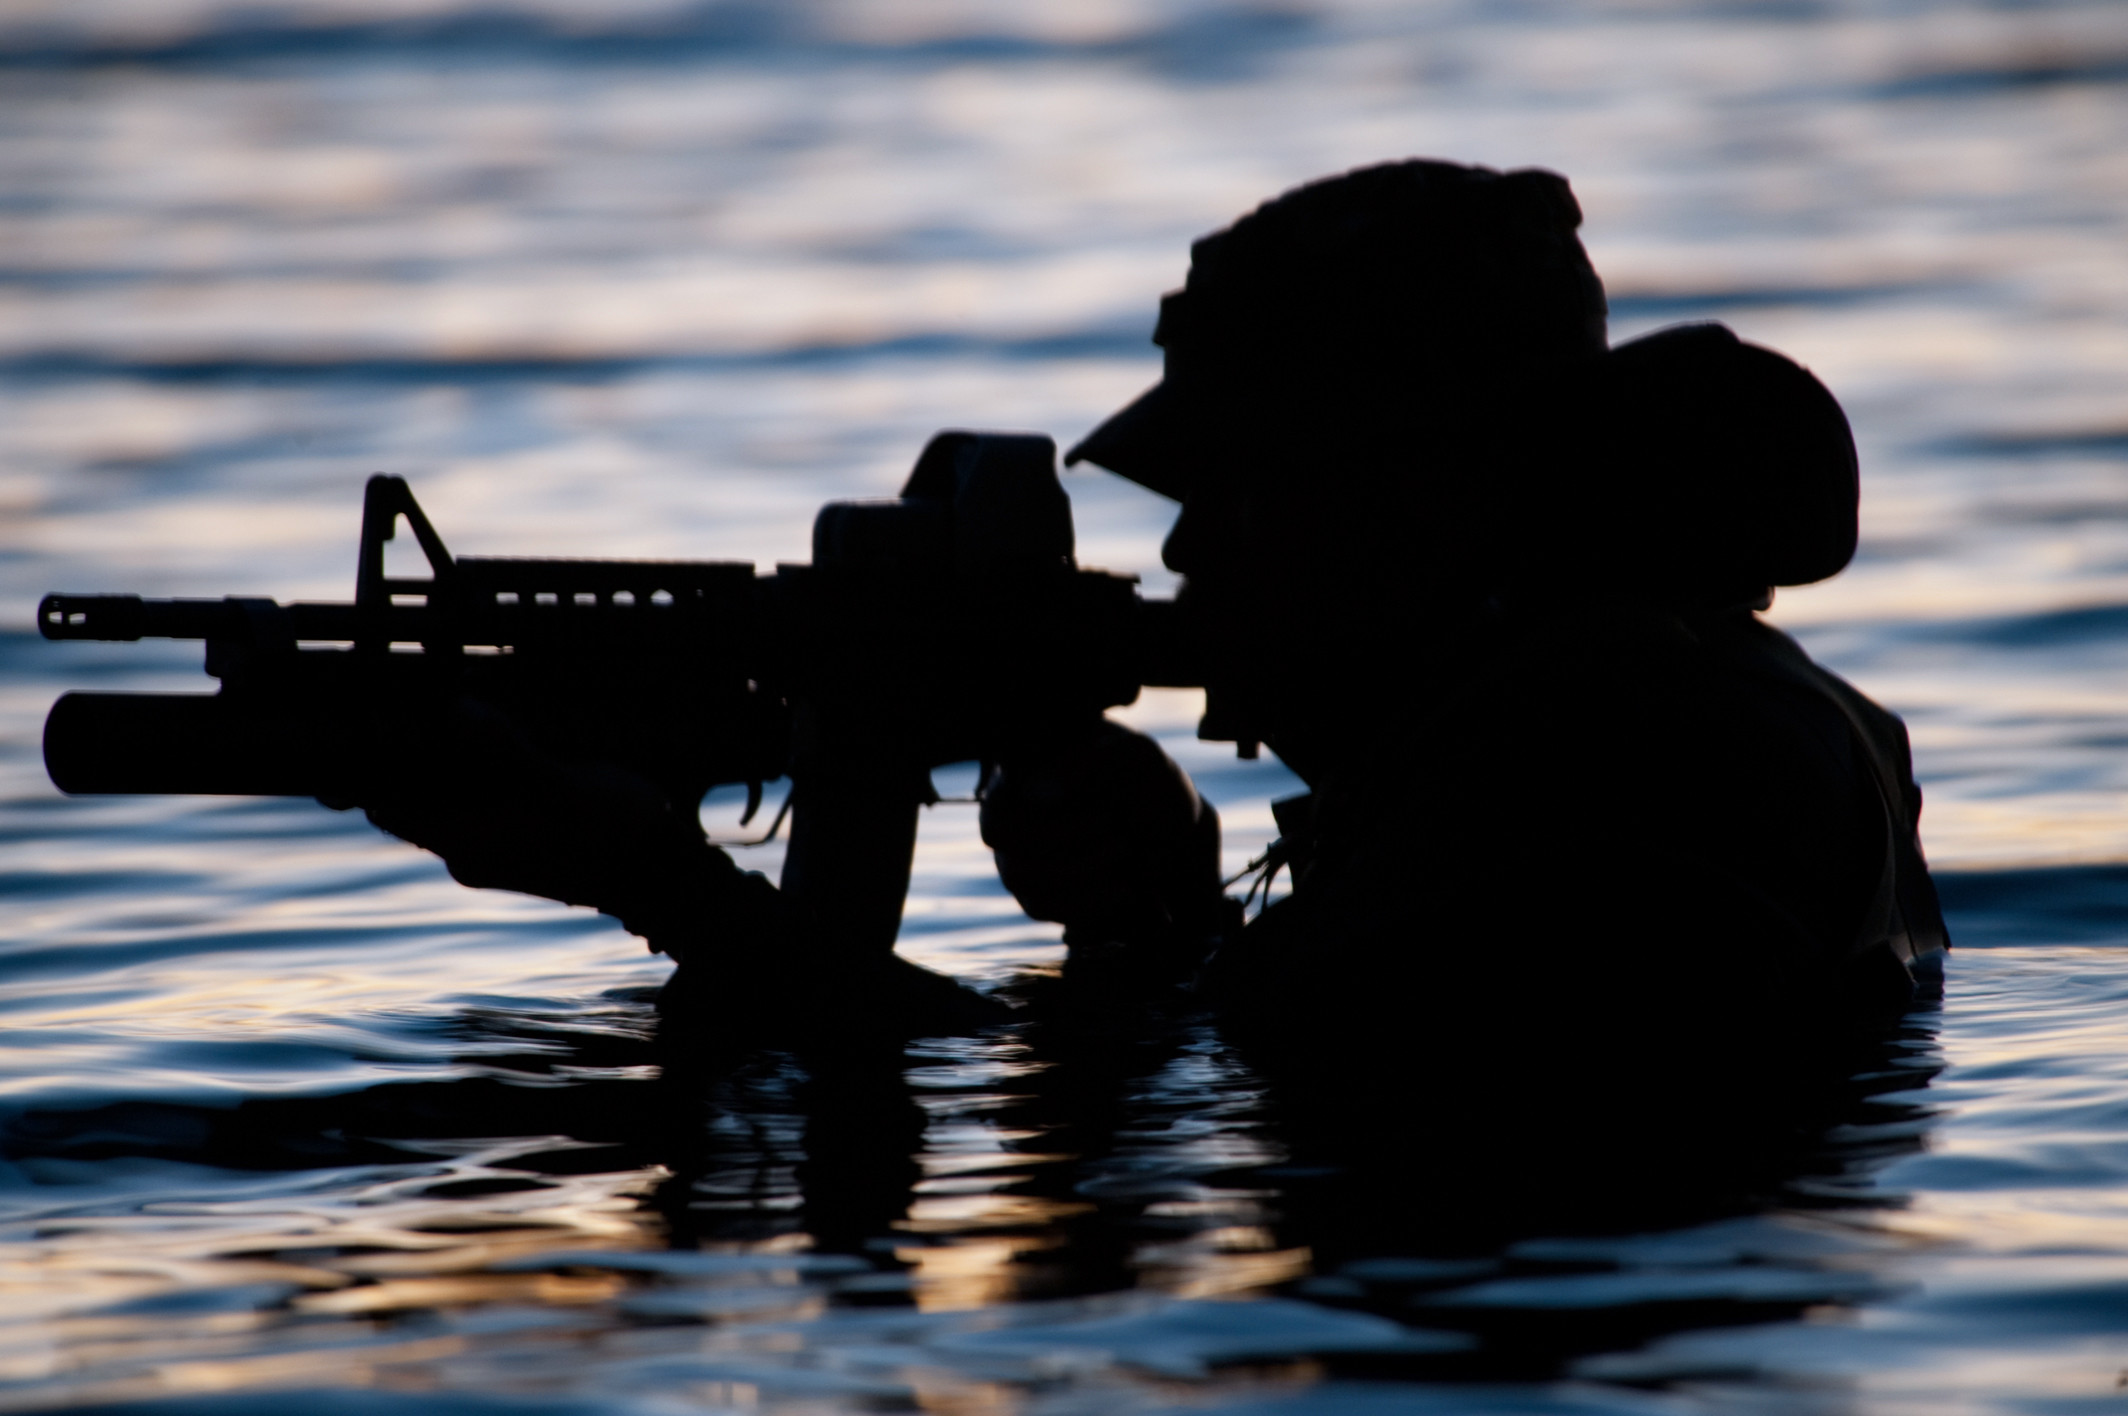 2128x1416 Navy SEAL Photo. Download hi-res